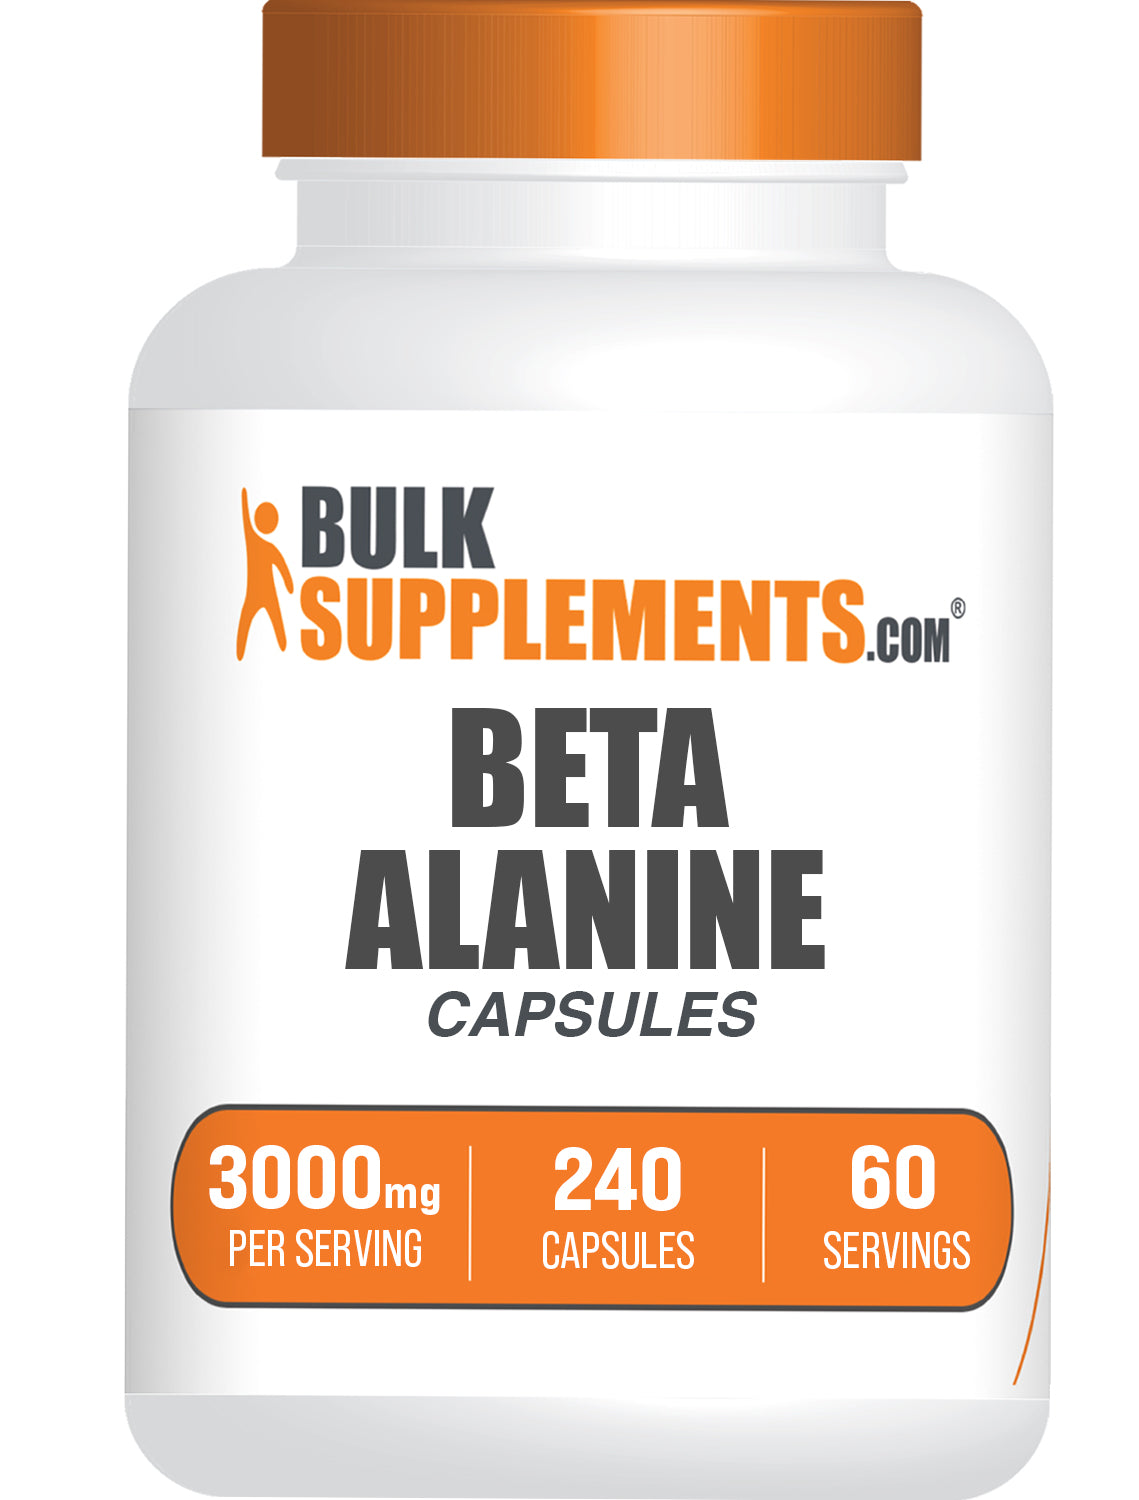 BulkSupplements.com Beta Alanine 3000mg Capsules 240ct bottle image